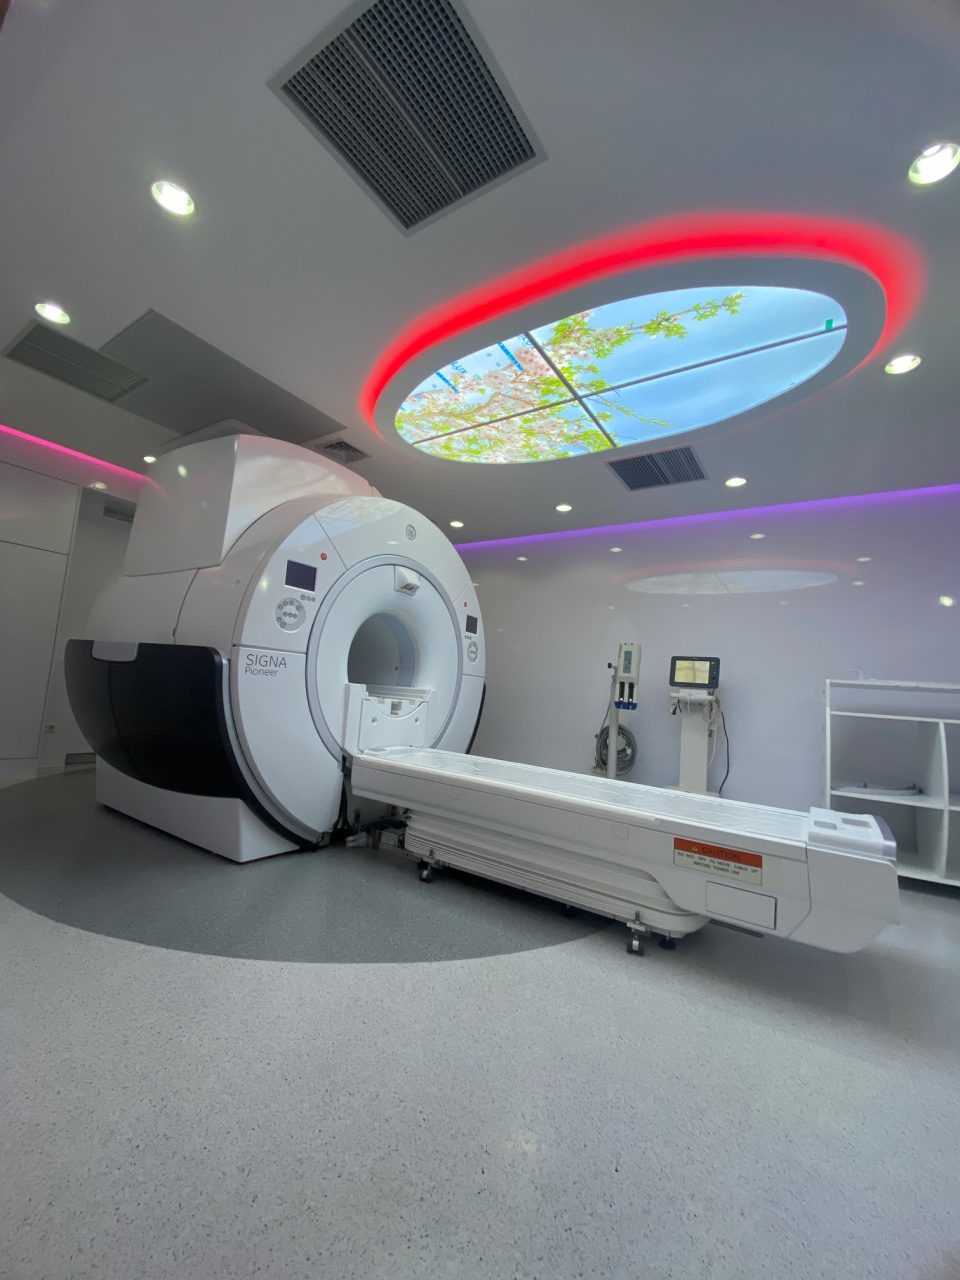 MRI 3 Tesla, Bintaro Premier Hospital's Commitment to Improve Health Services